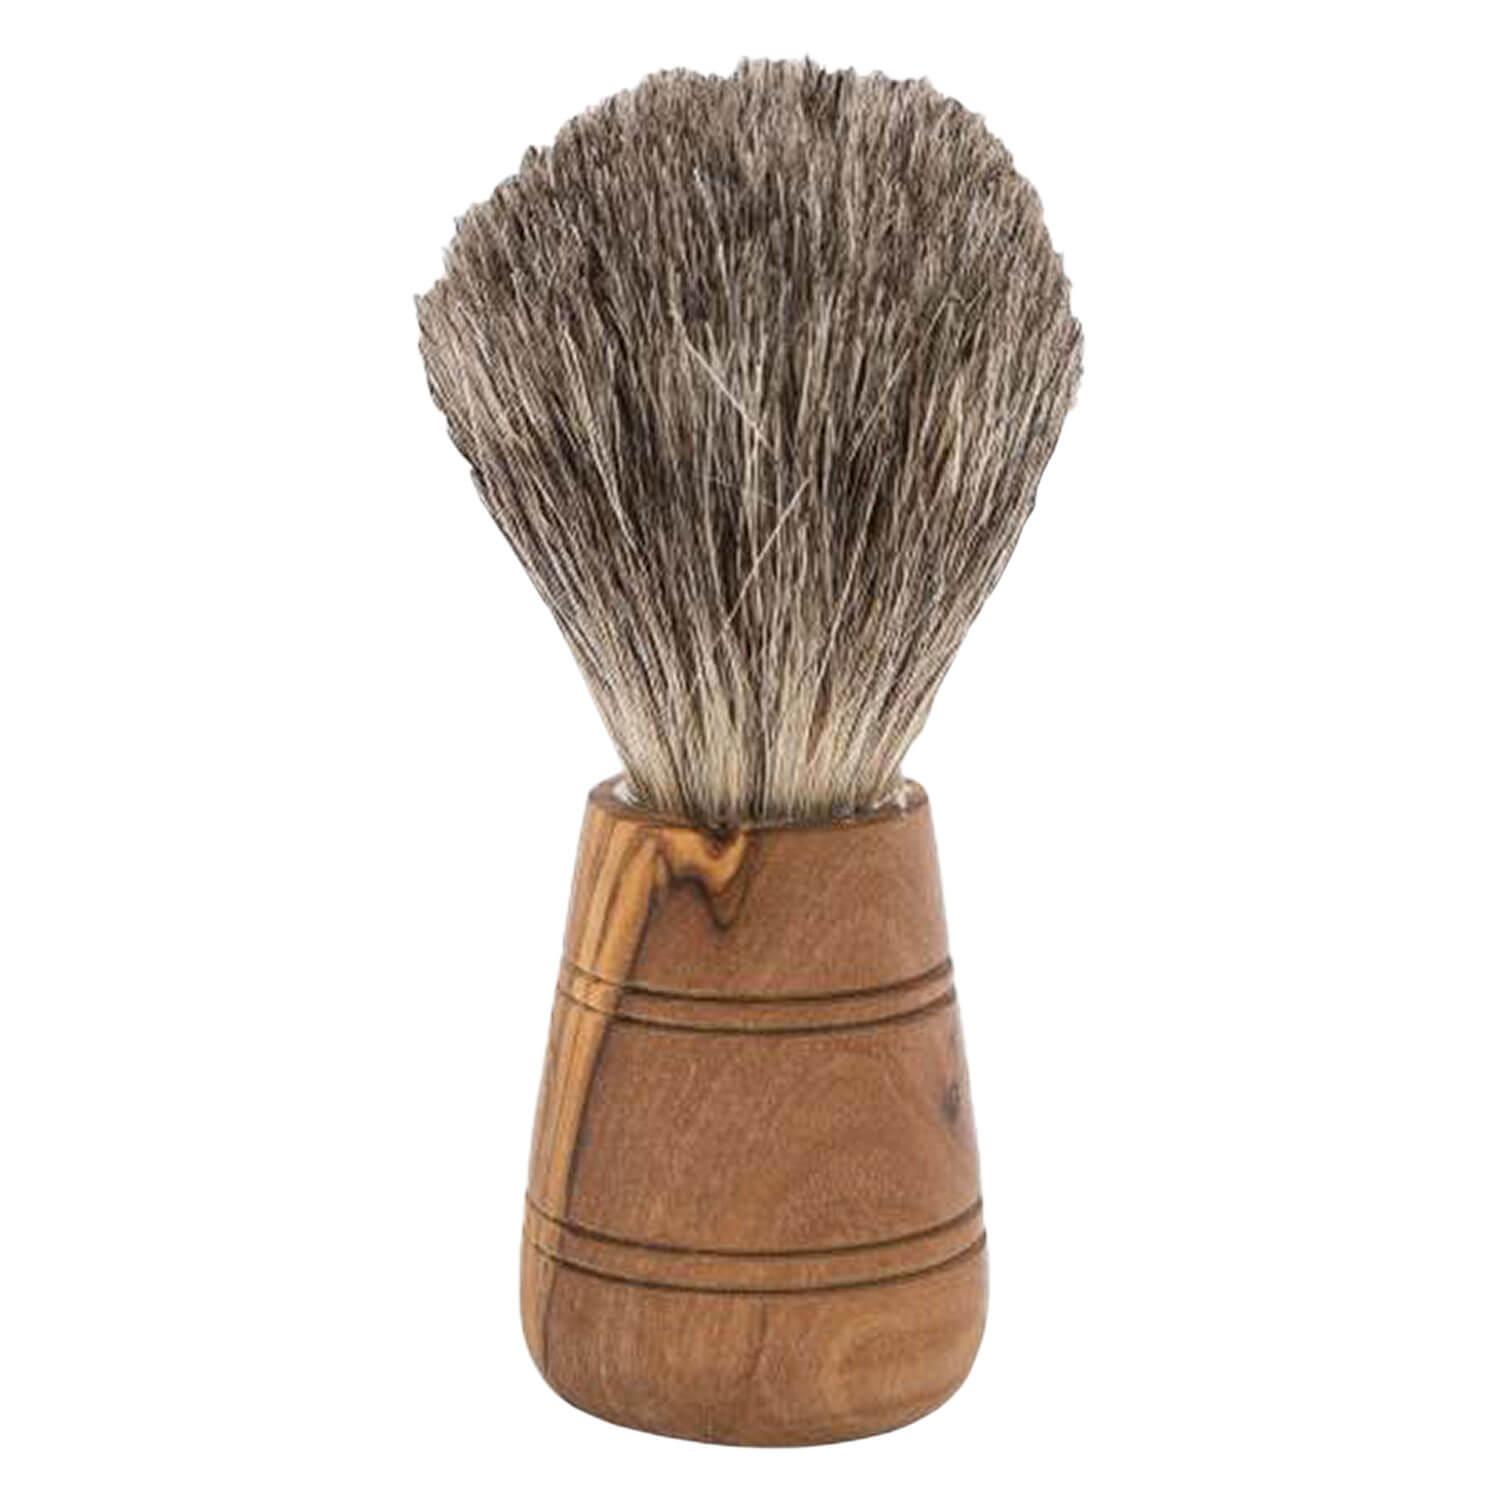 jolu - Badger Hair Shaving Brush